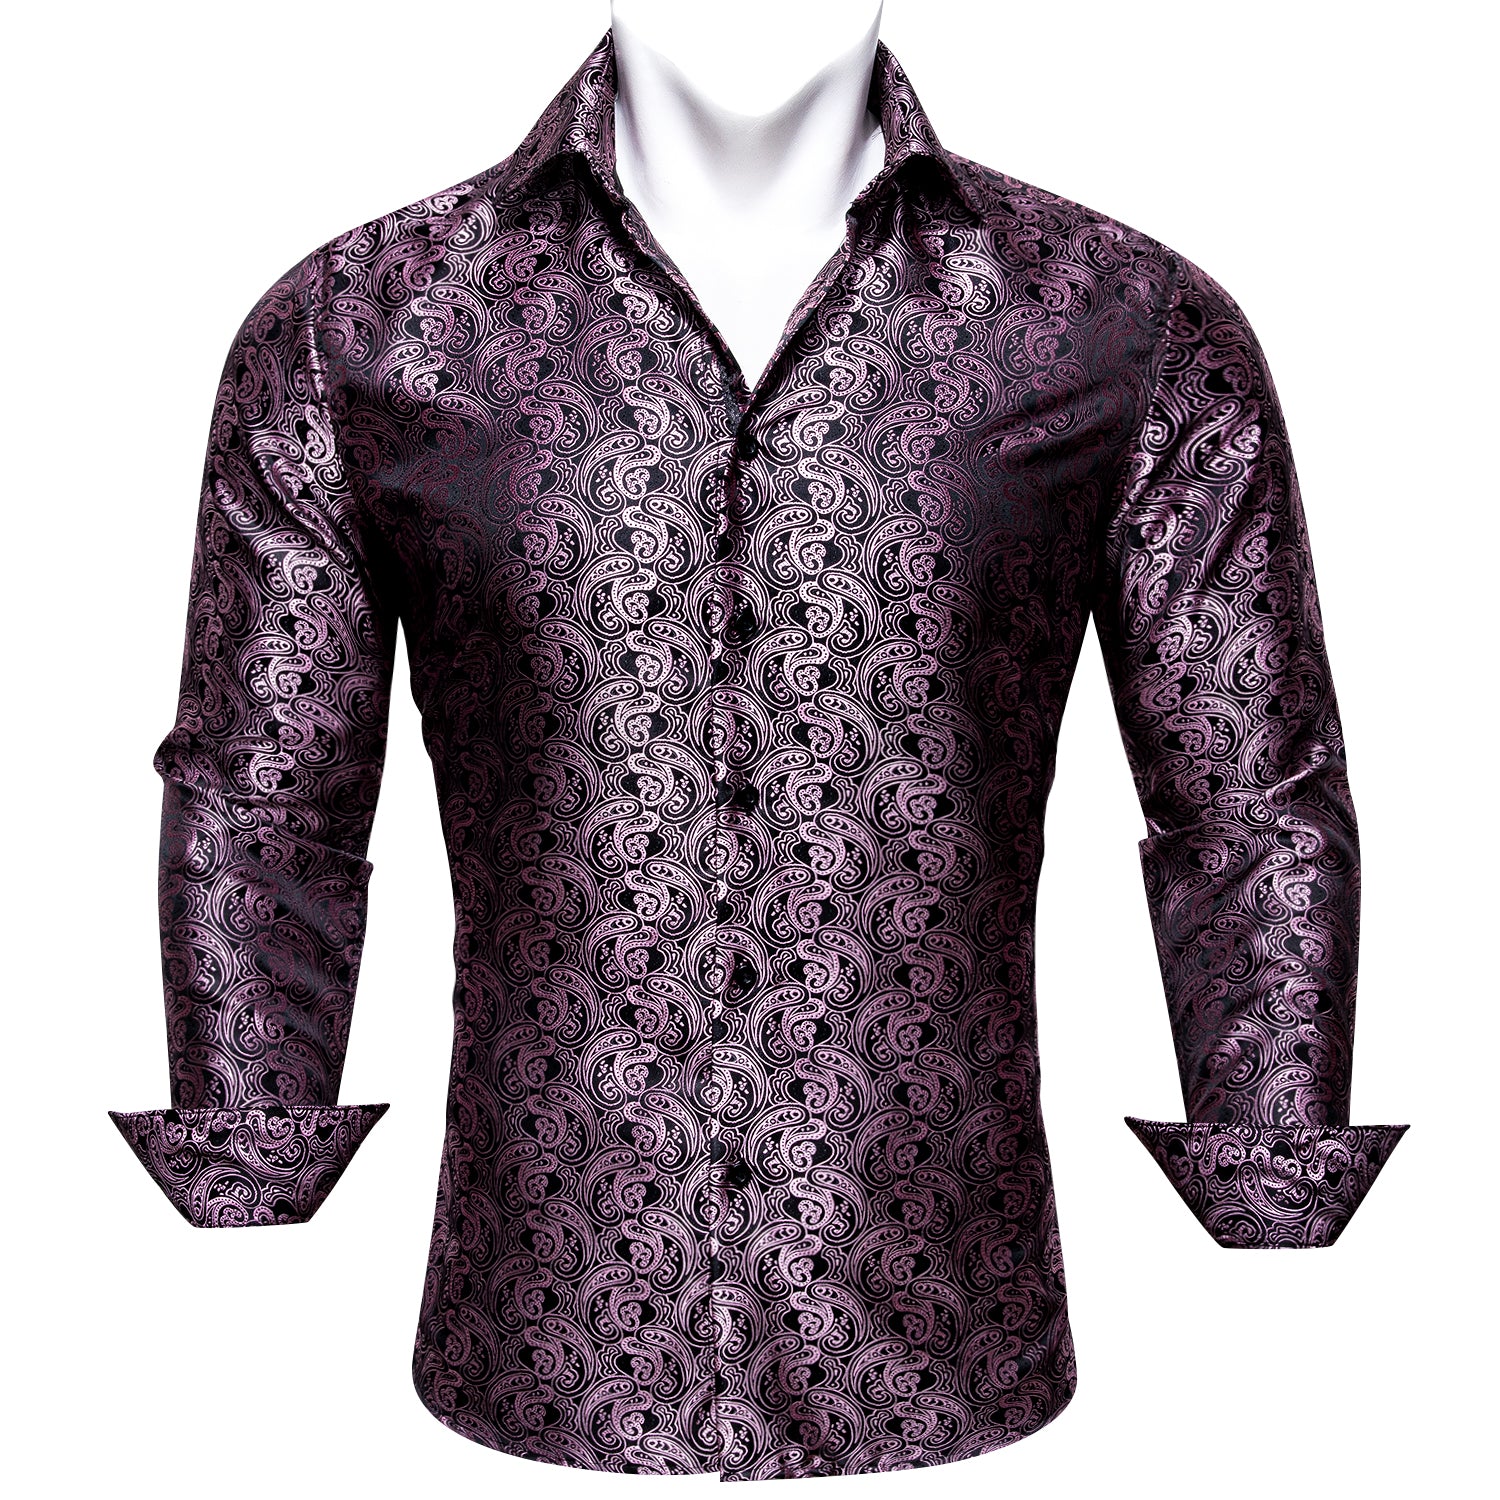 Barry Wang Men's Shirt Black Pink Paisley Silk Long Sleeve Shirt